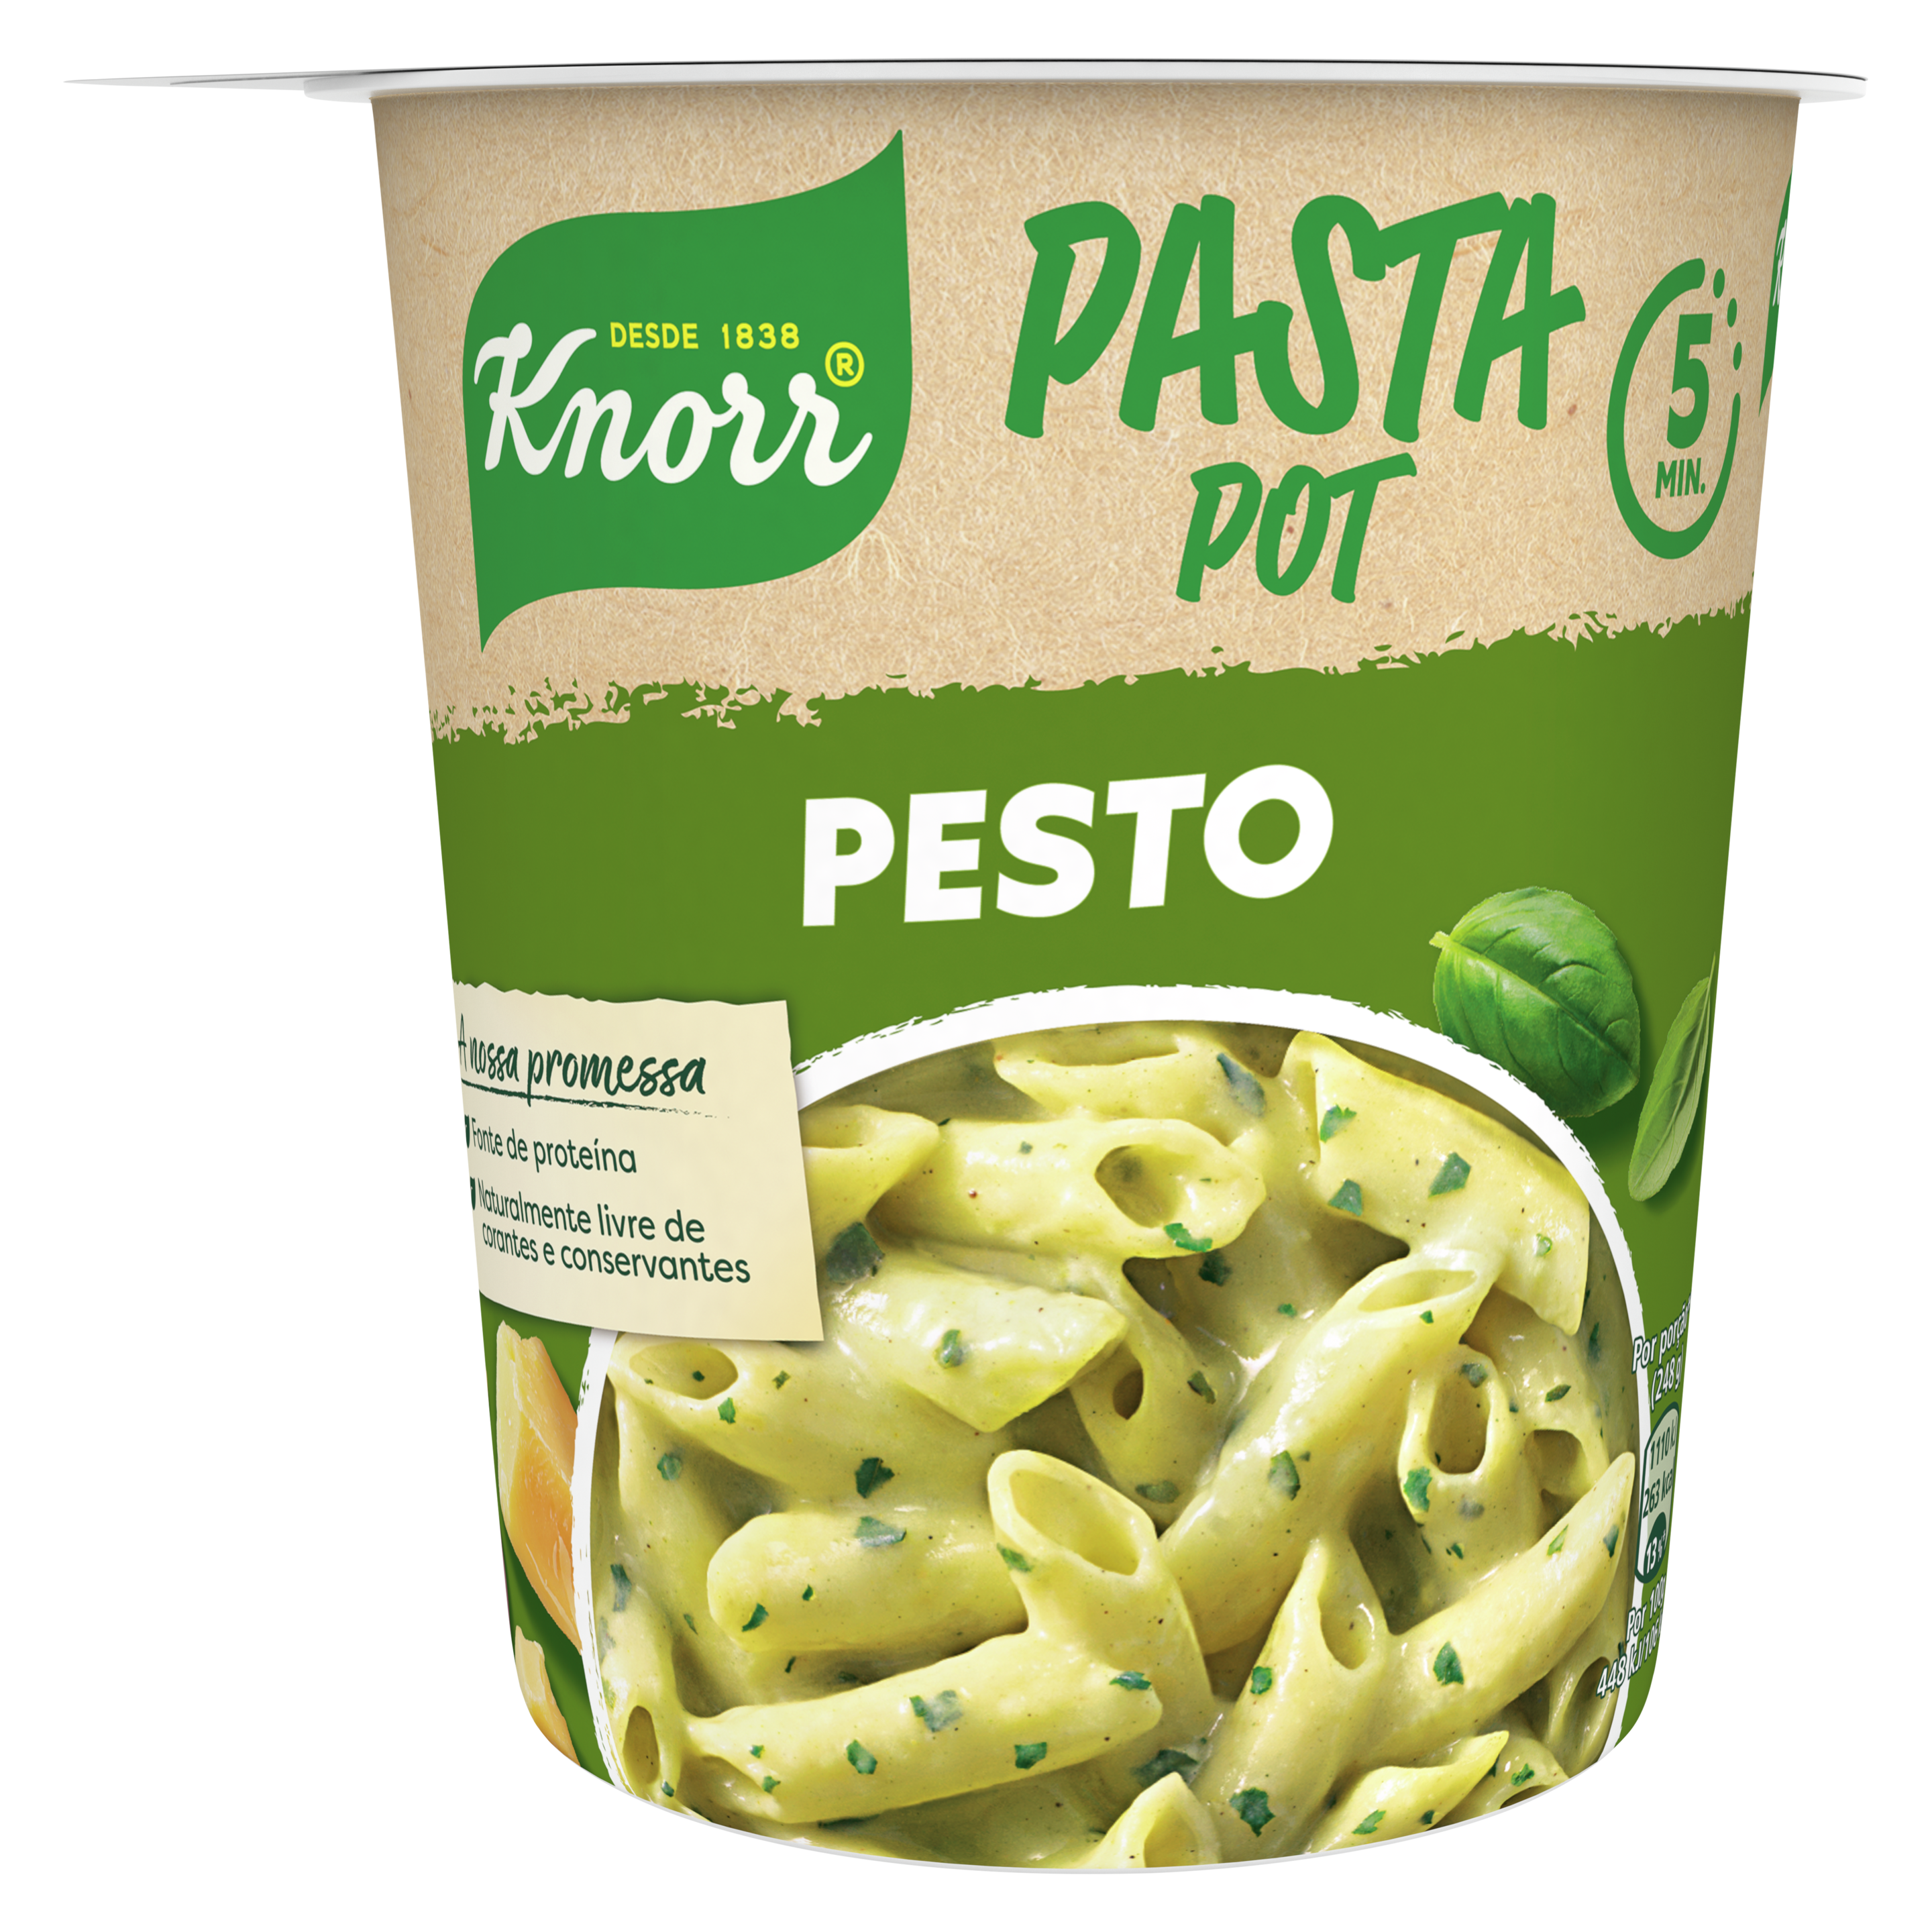 Pasta Pot Pesto